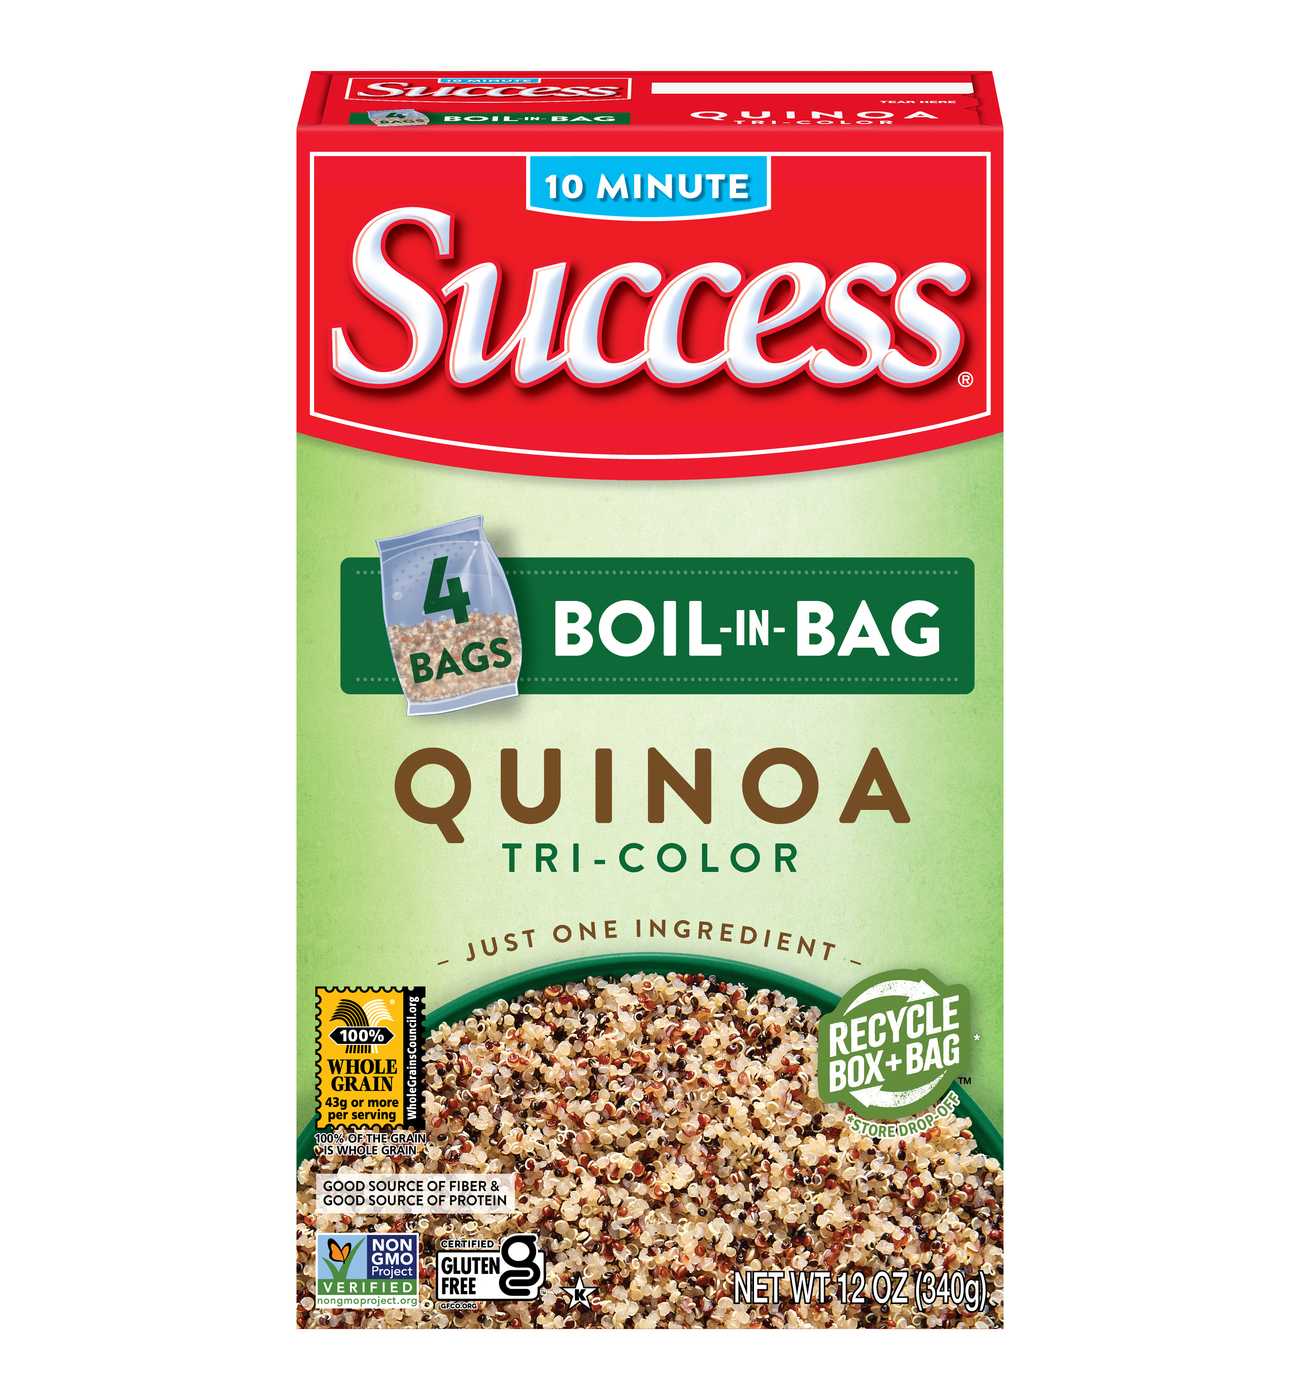 Success Boil-in-Bag Tri-Color Quinoa; image 1 of 2